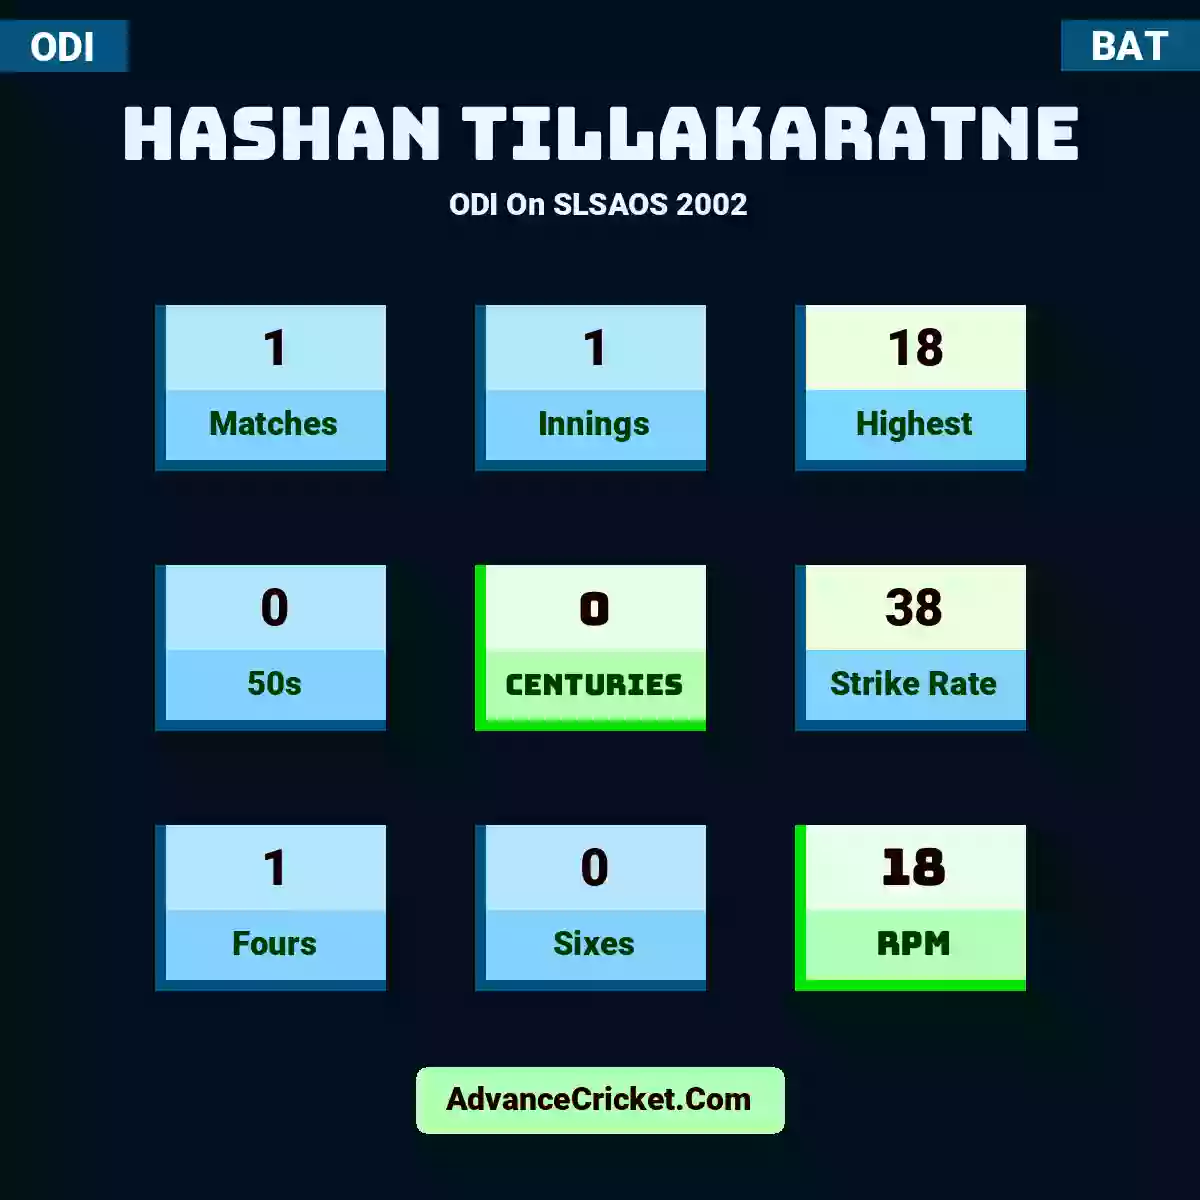 Hashan Tillakaratne ODI  On SLSAOS 2002, Hashan Tillakaratne played 1 matches, scored 18 runs as highest, 0 half-centuries, and 0 centuries, with a strike rate of 38. H.Tillakaratne hit 1 fours and 0 sixes, with an RPM of 18.